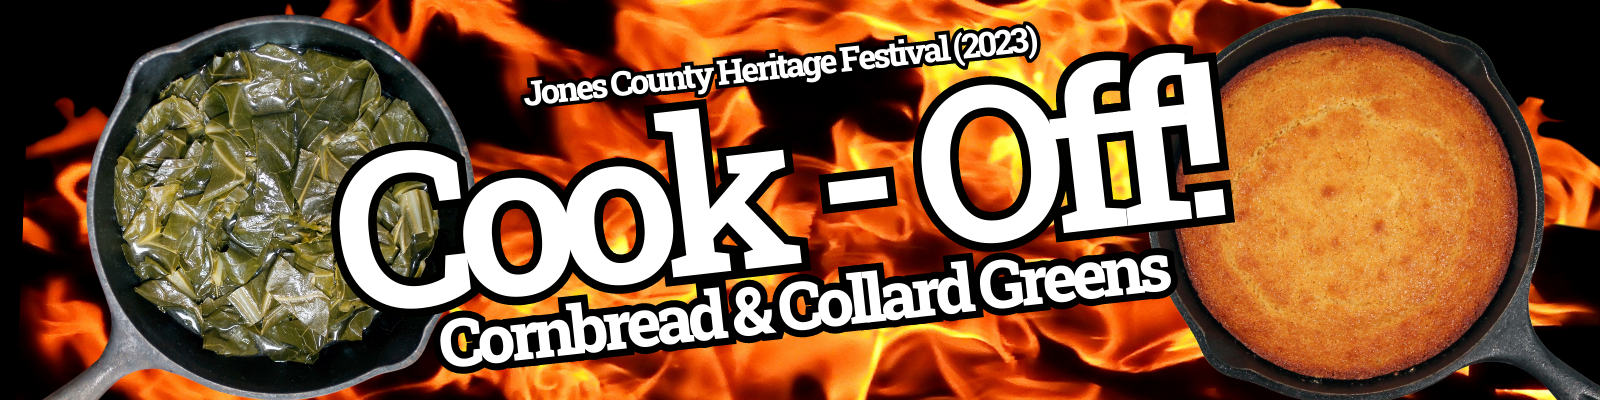 Jones County Heritage Festival (2023) Cook-Off! Cornbread & Collard Greens